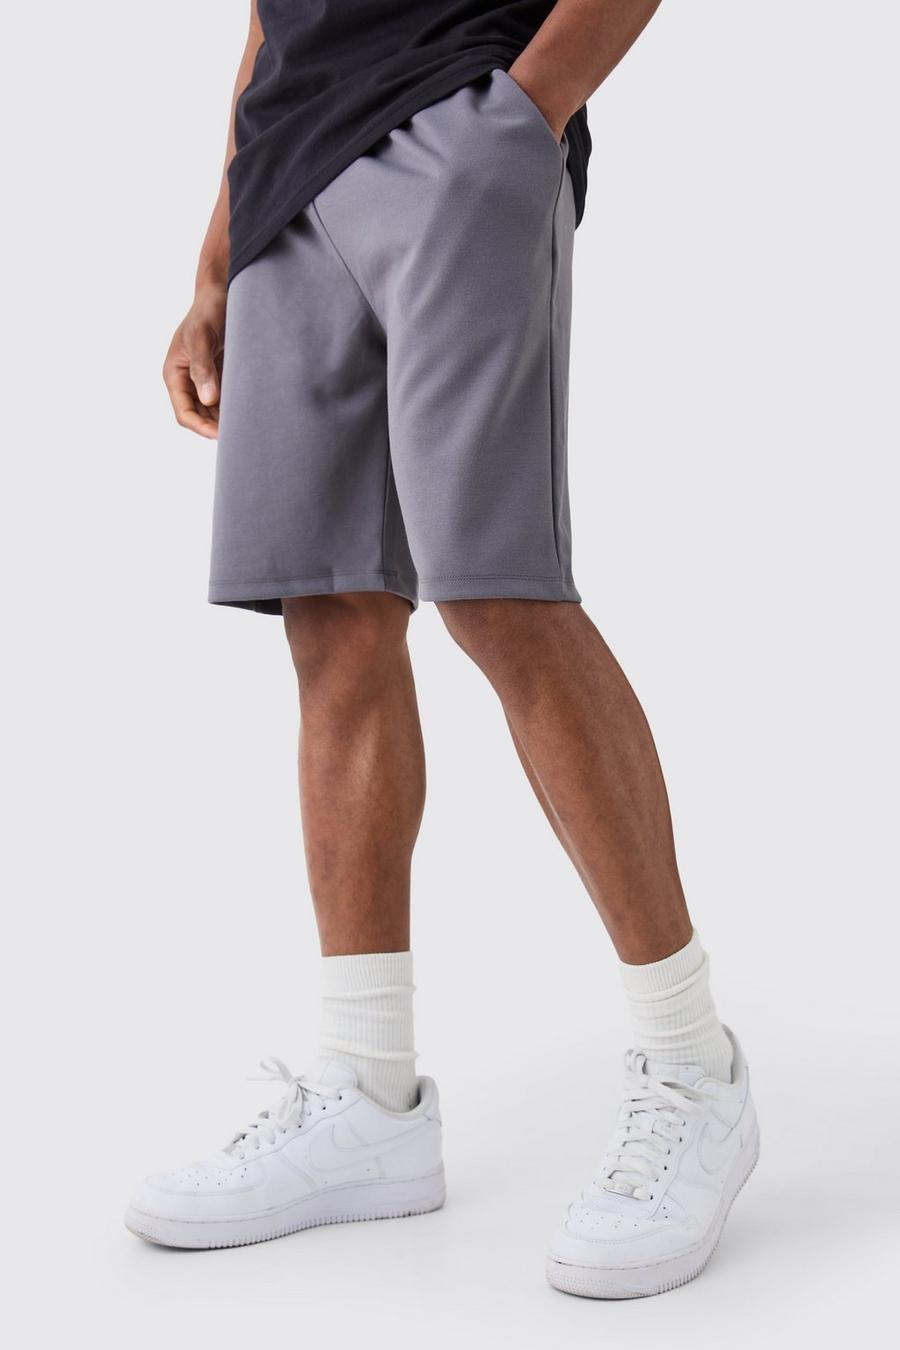 Pantalón corto holgado de largo medio Premium súper grueso, Charcoal